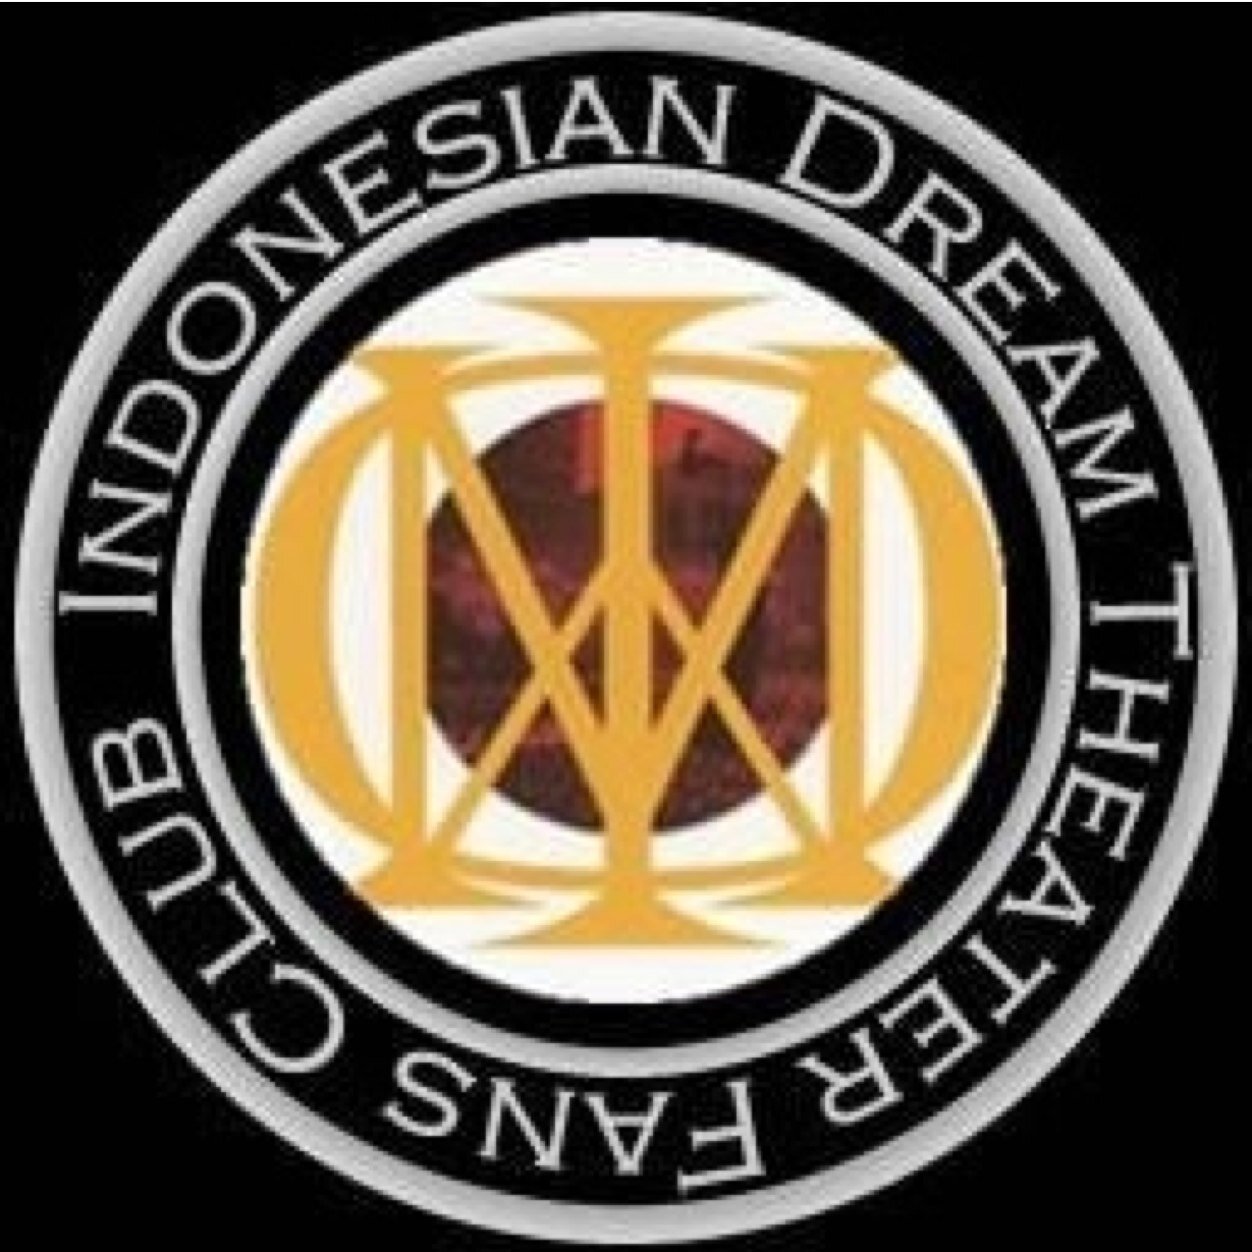 Indonesian Dream Theater Fan Club, semua info terbaru dan terlengkap soal #DT & #IDTFC
#DTnight #DTQuiz